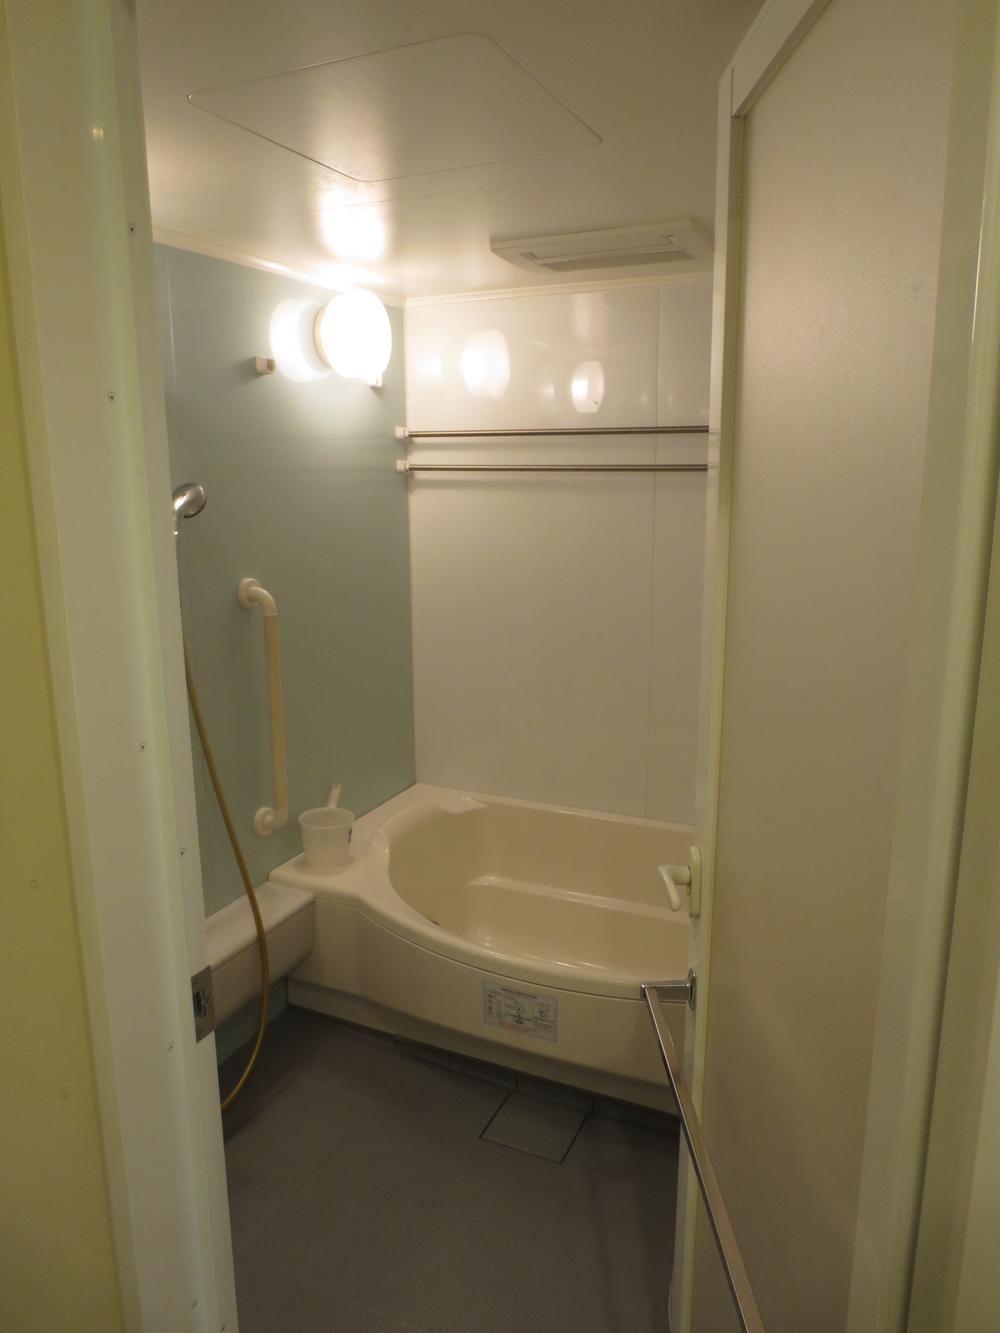 Bathroom. Otobasu dated bathroom ventilation dryer